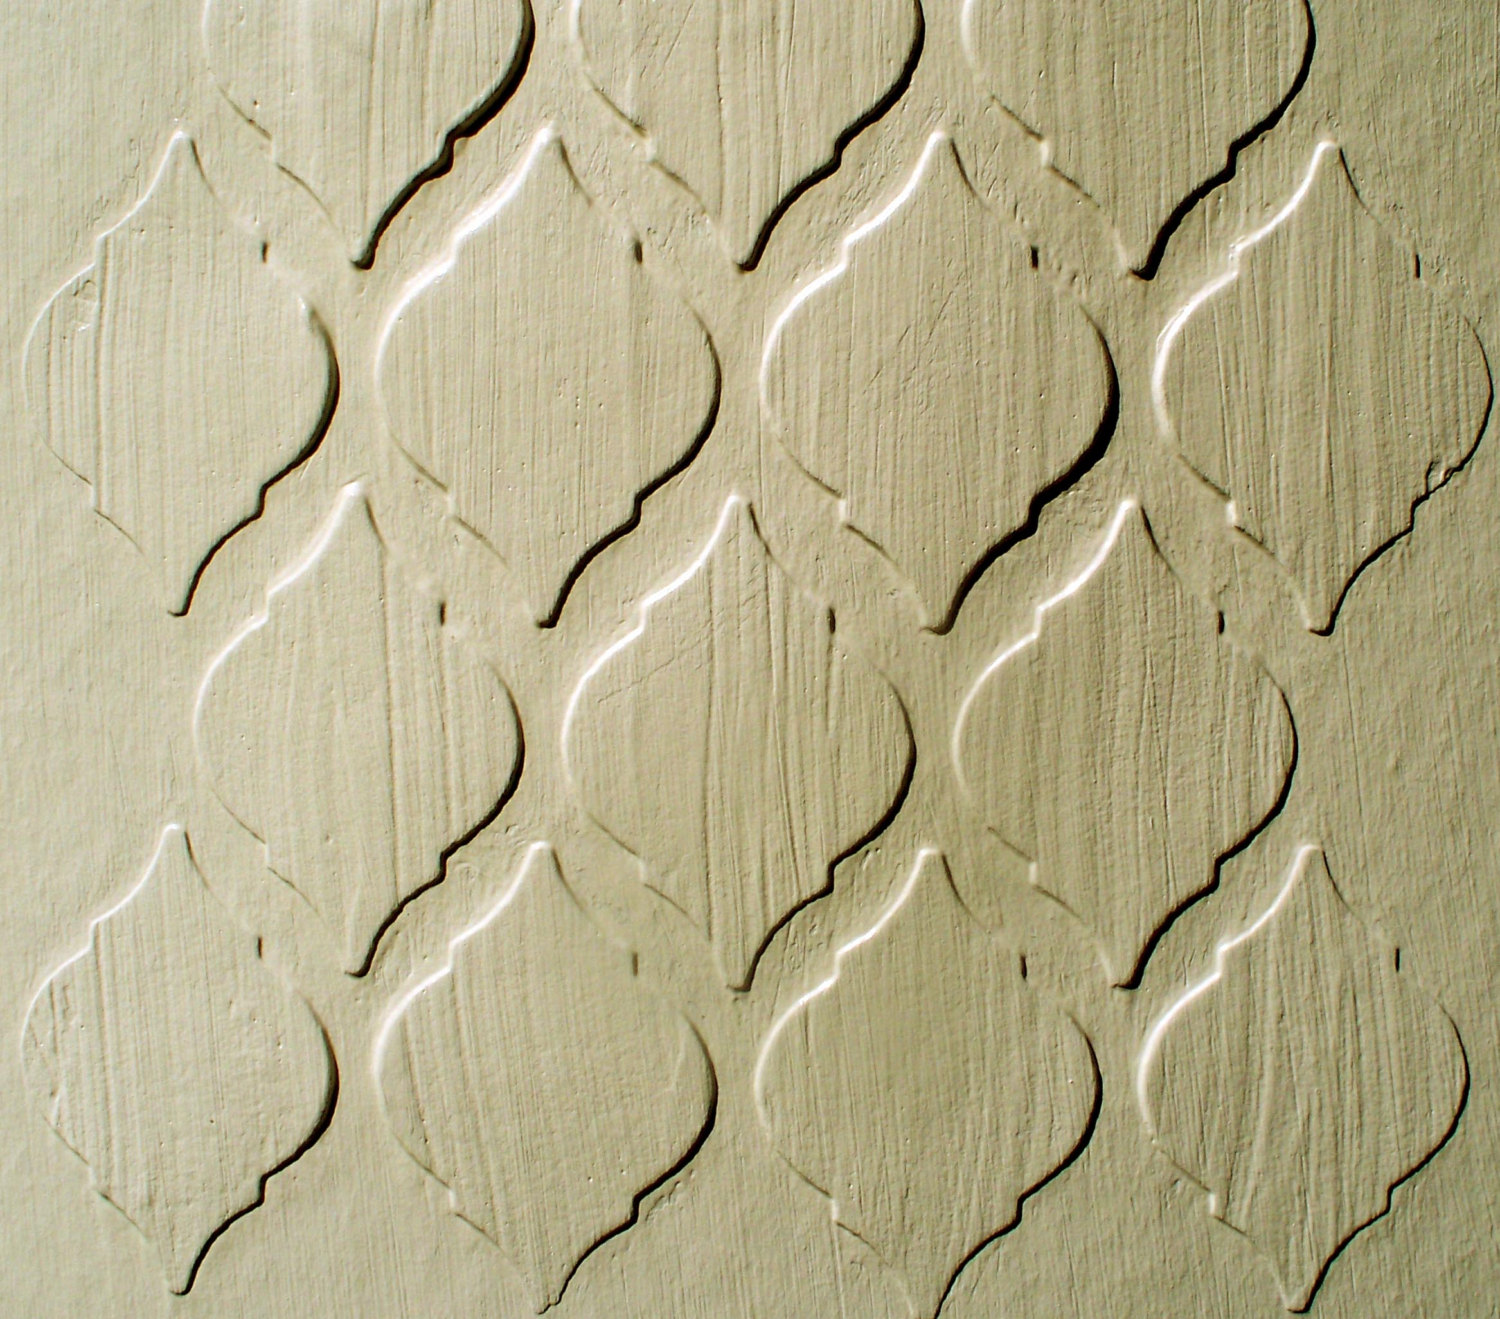 Raised Plaster Stencil Tile Wallpaper Paint By Elegantstencils